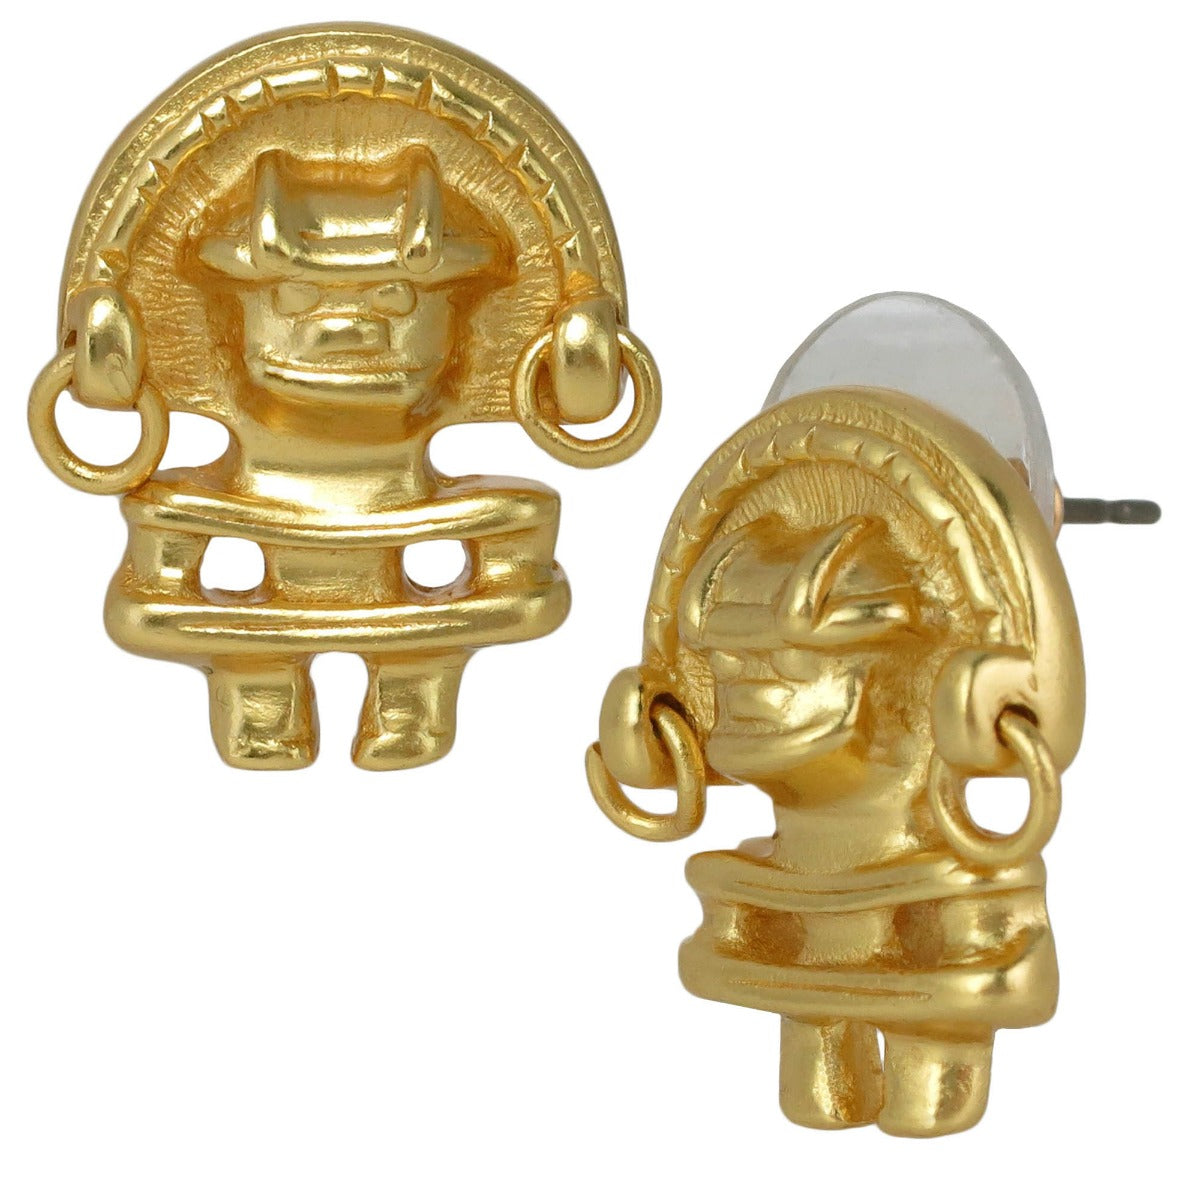 Tairona Anthropomorphic Figure with Diadem (S) Earrings